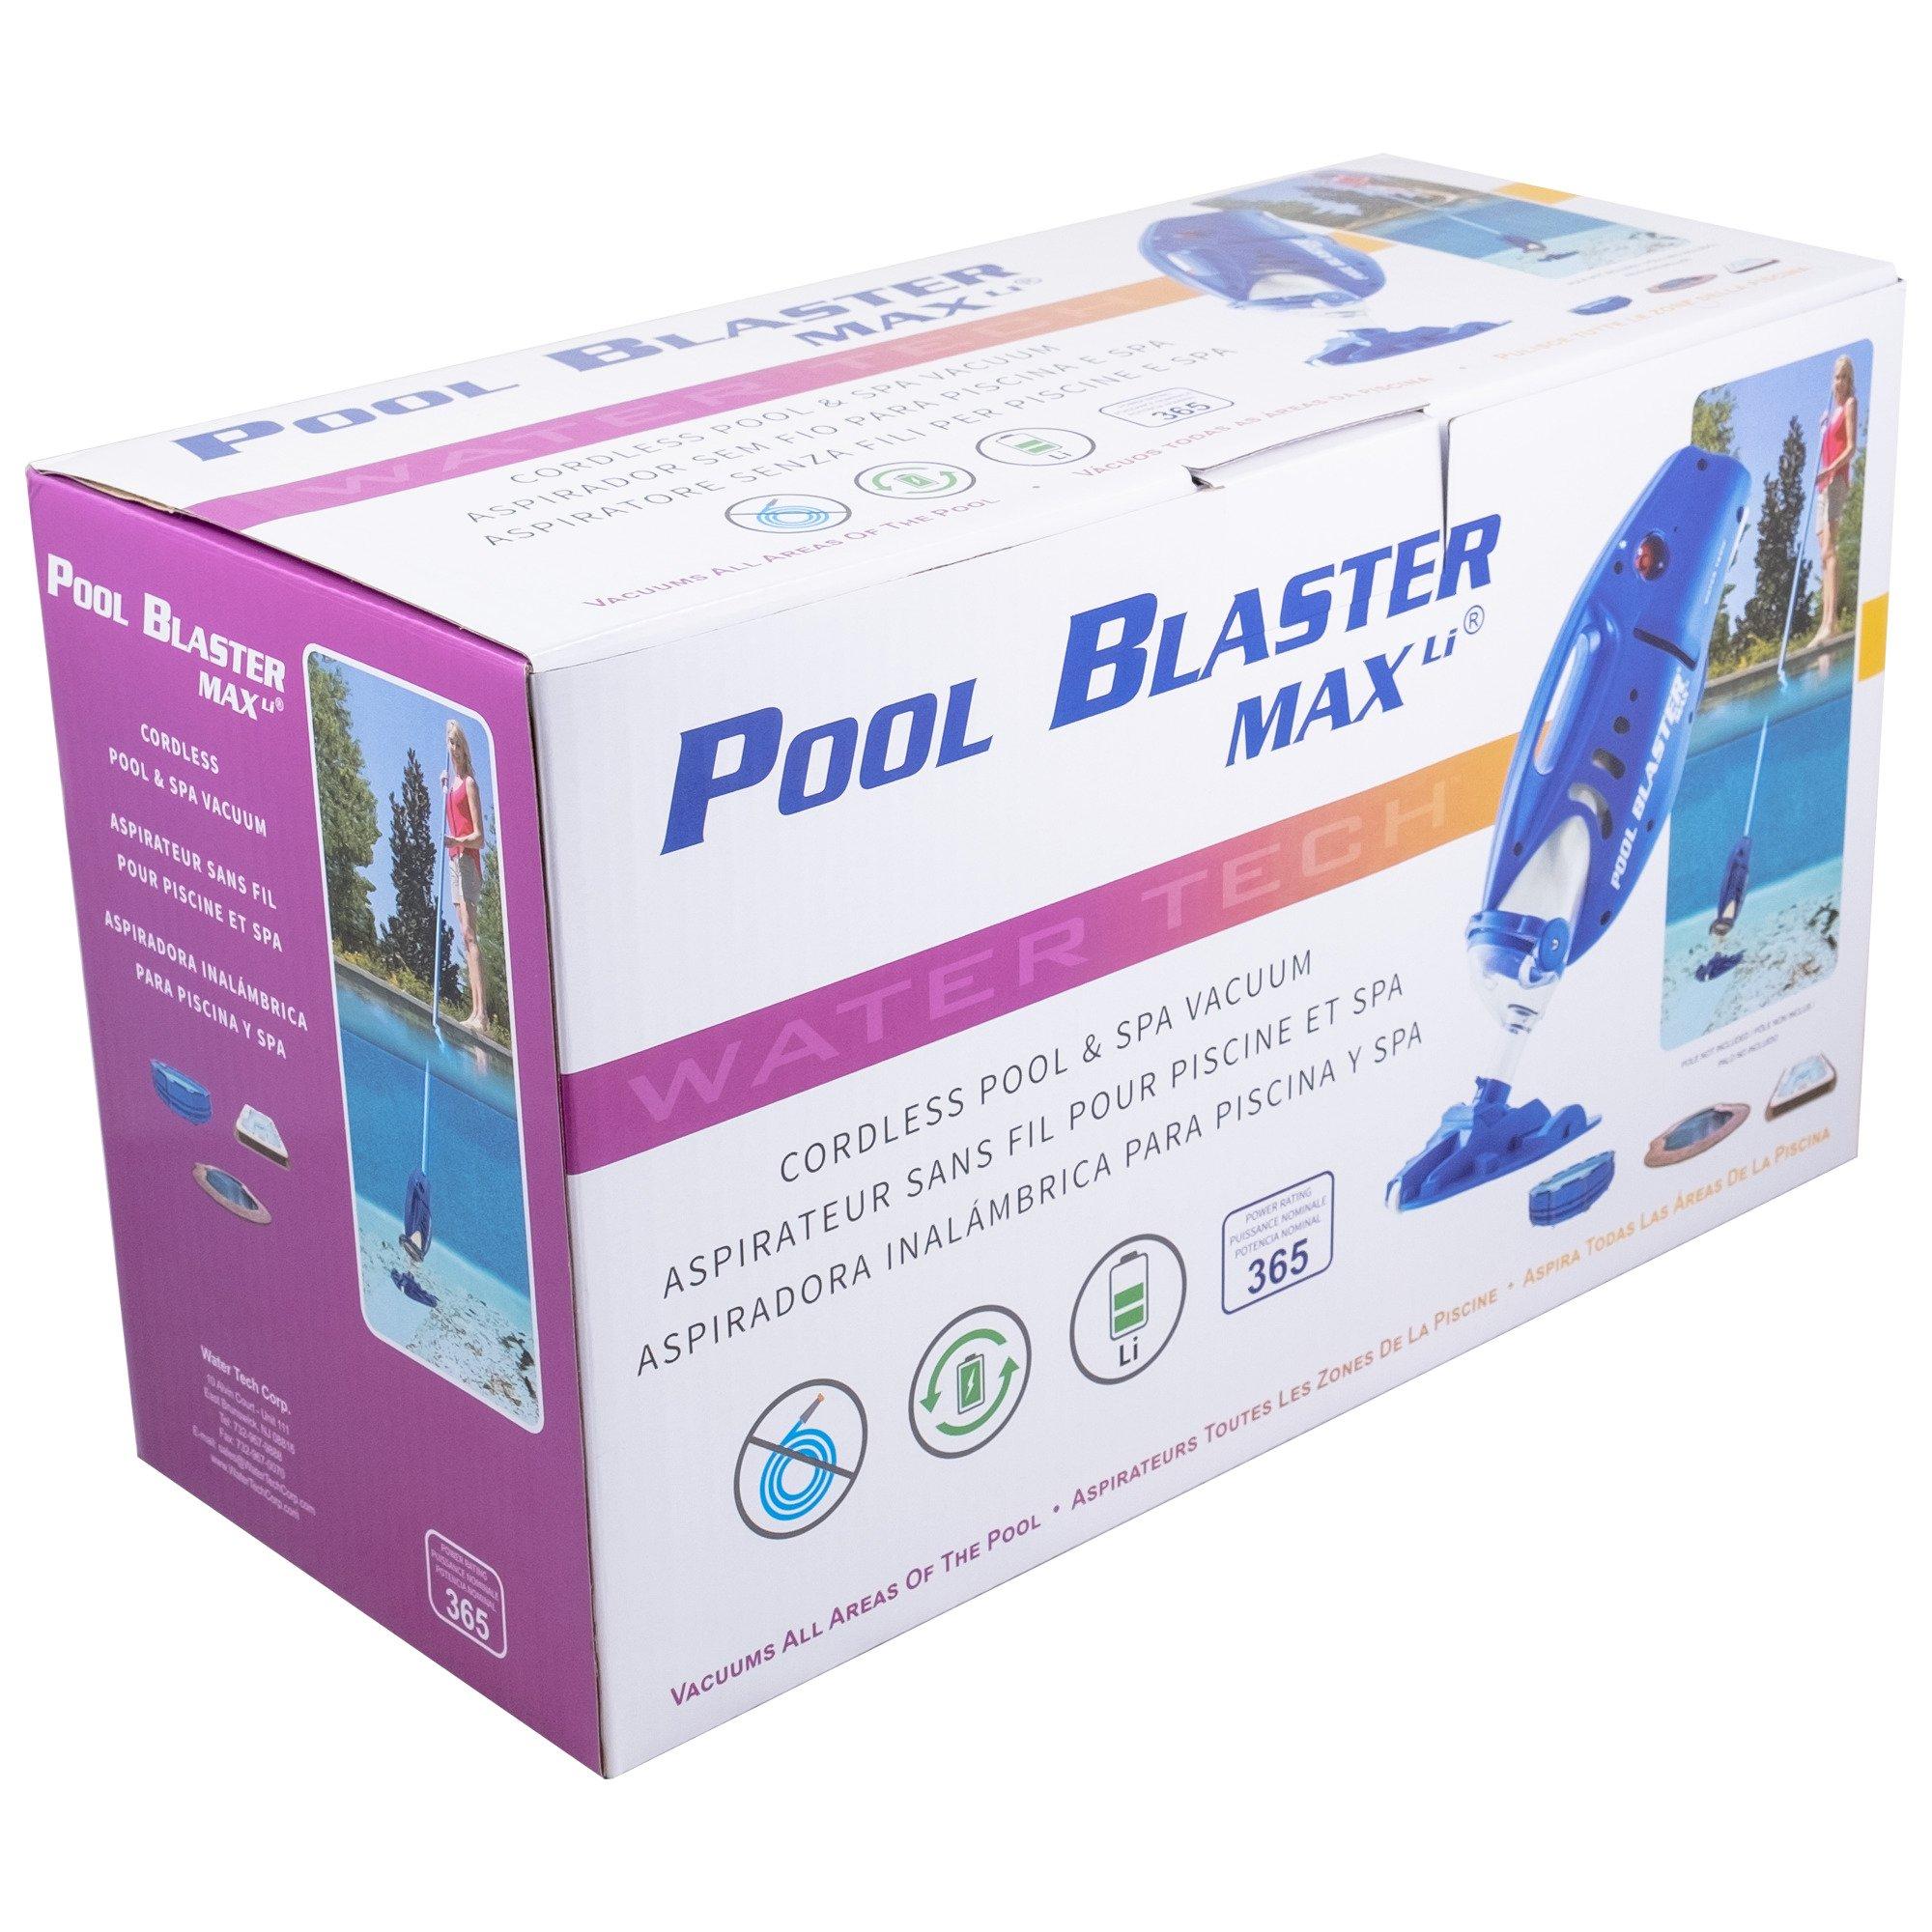 Water Tech  Pool Blaster Max Li Cordless Pool and Spa Vacuum